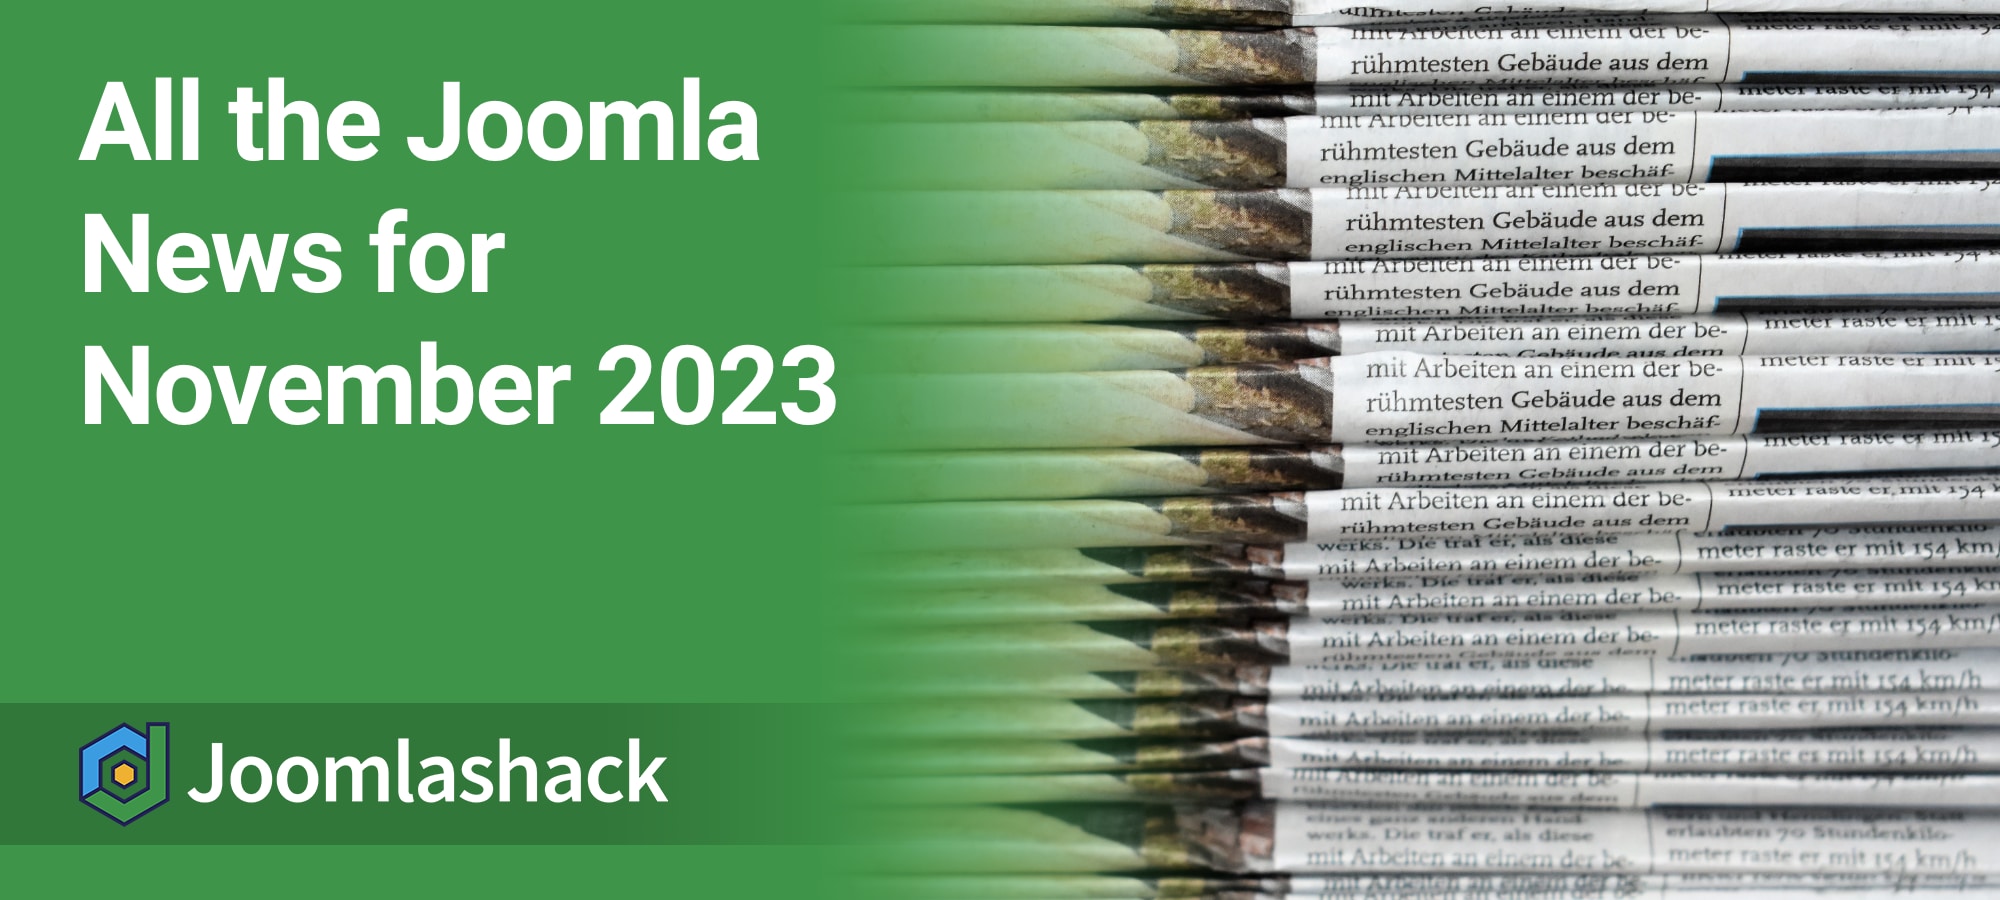 All the Joomla News for November 2023